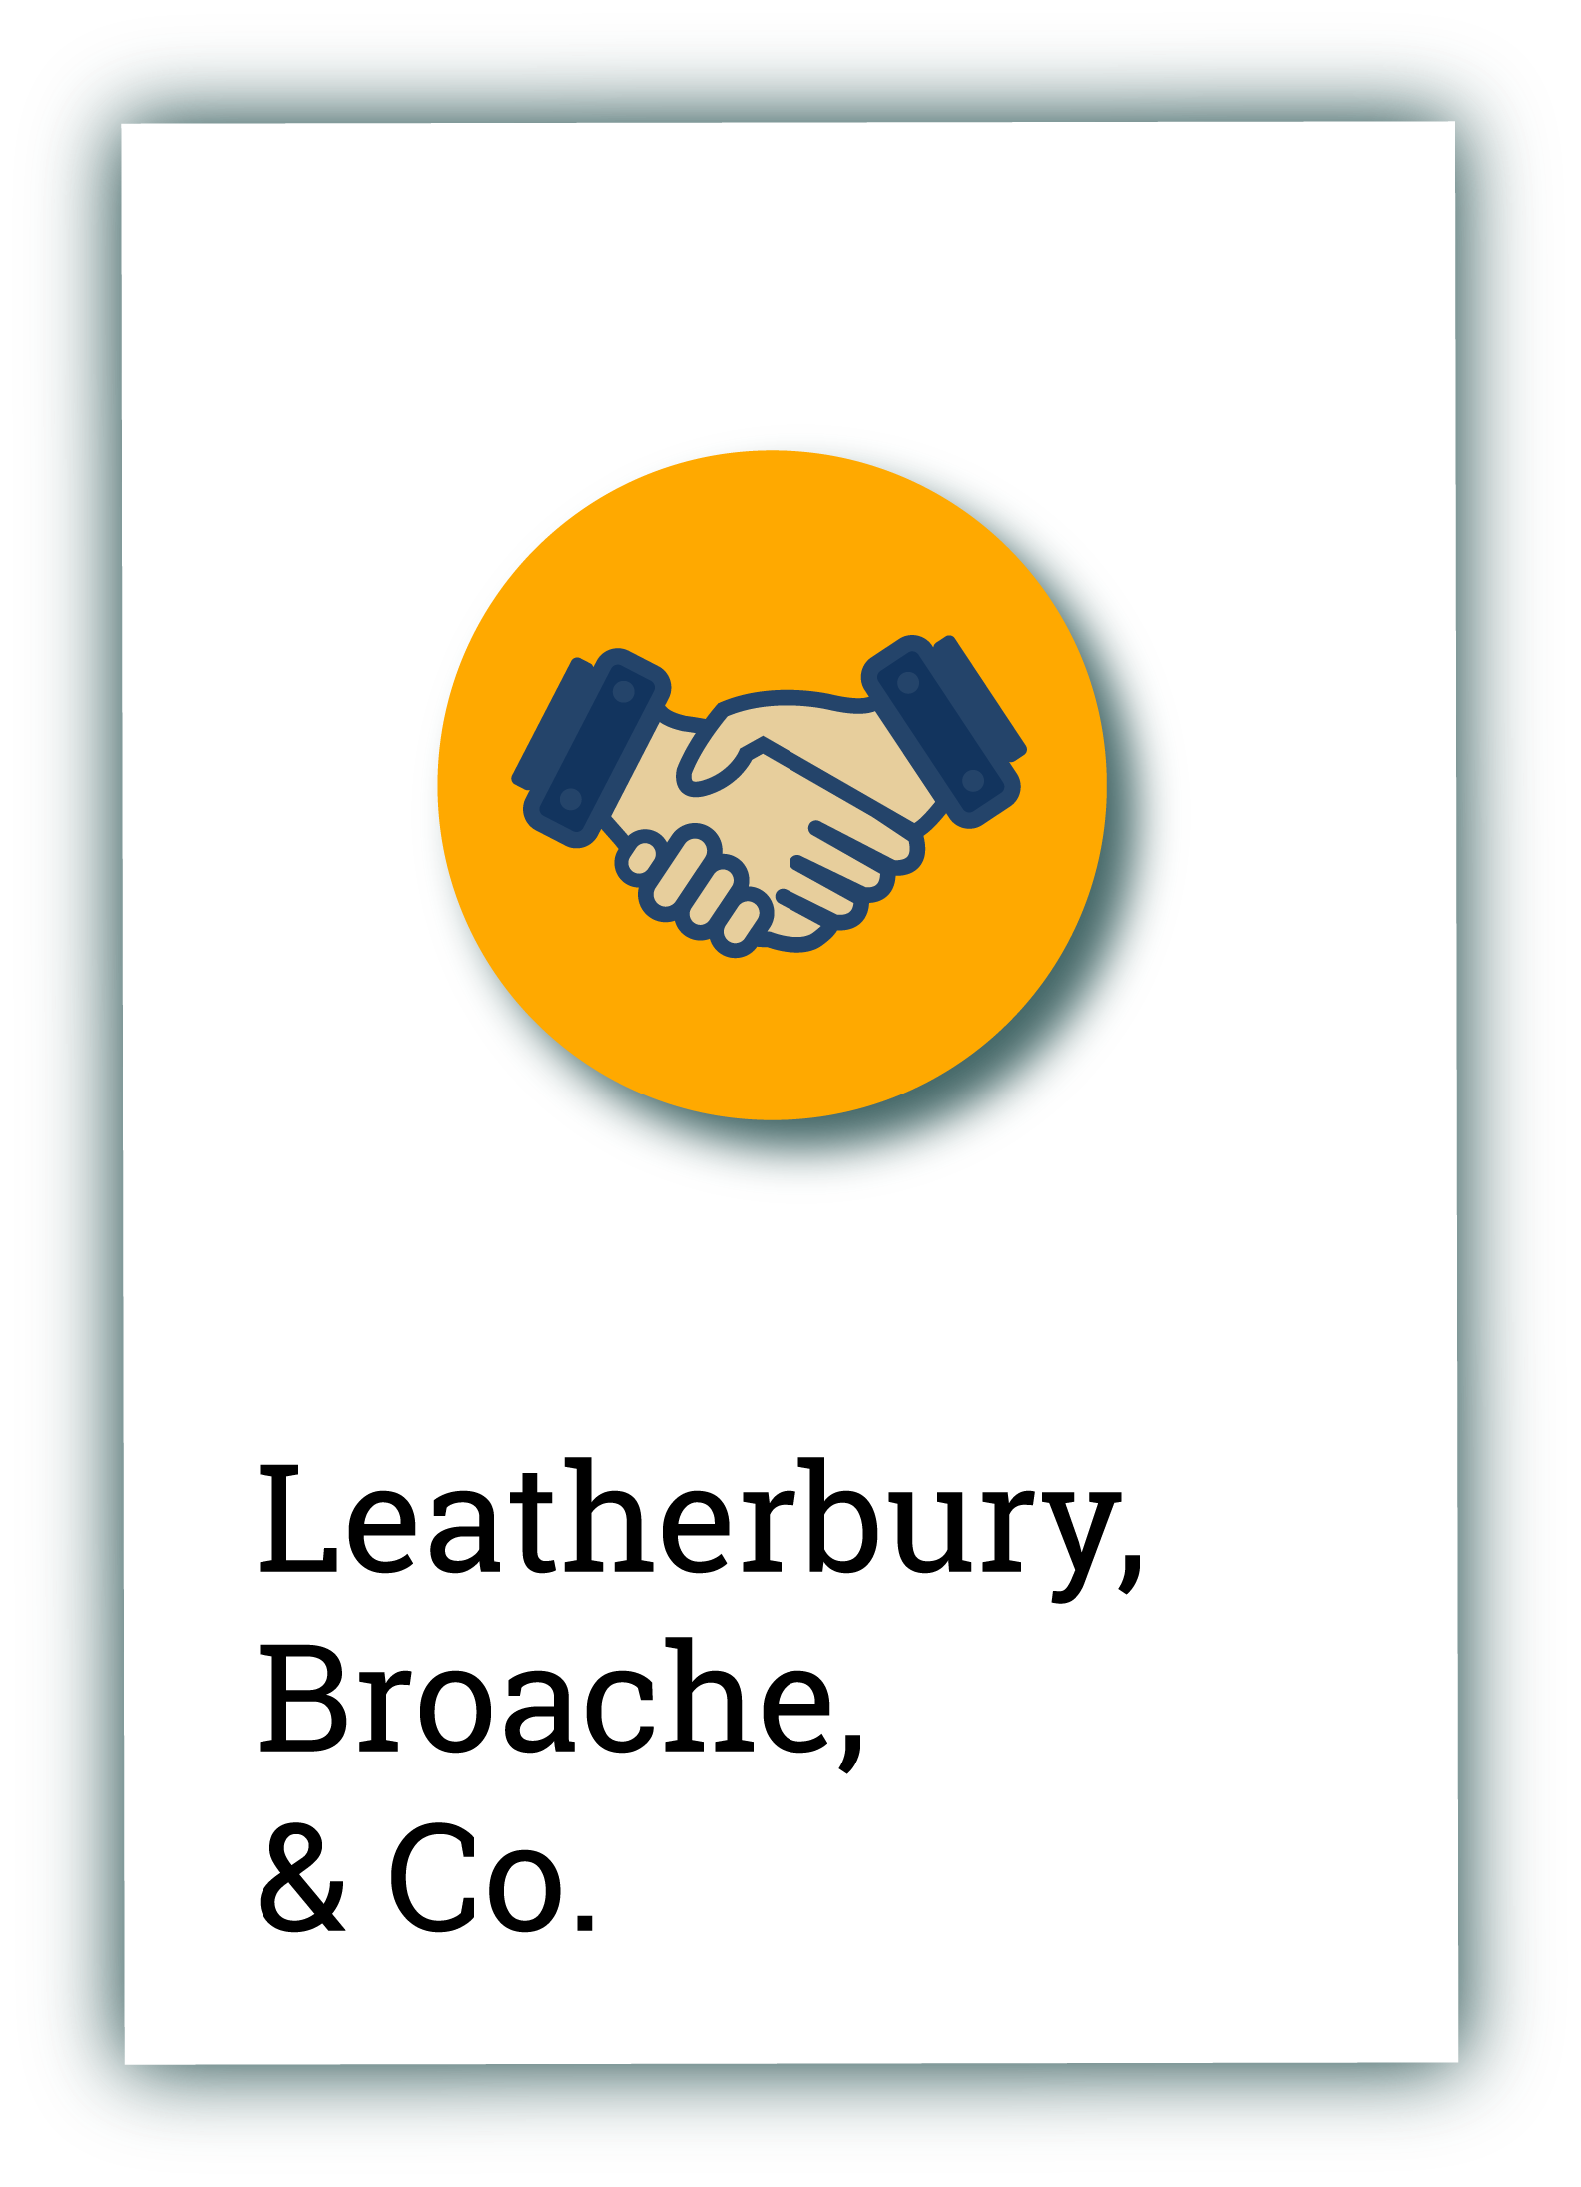 Leatherbury, Broache & Co